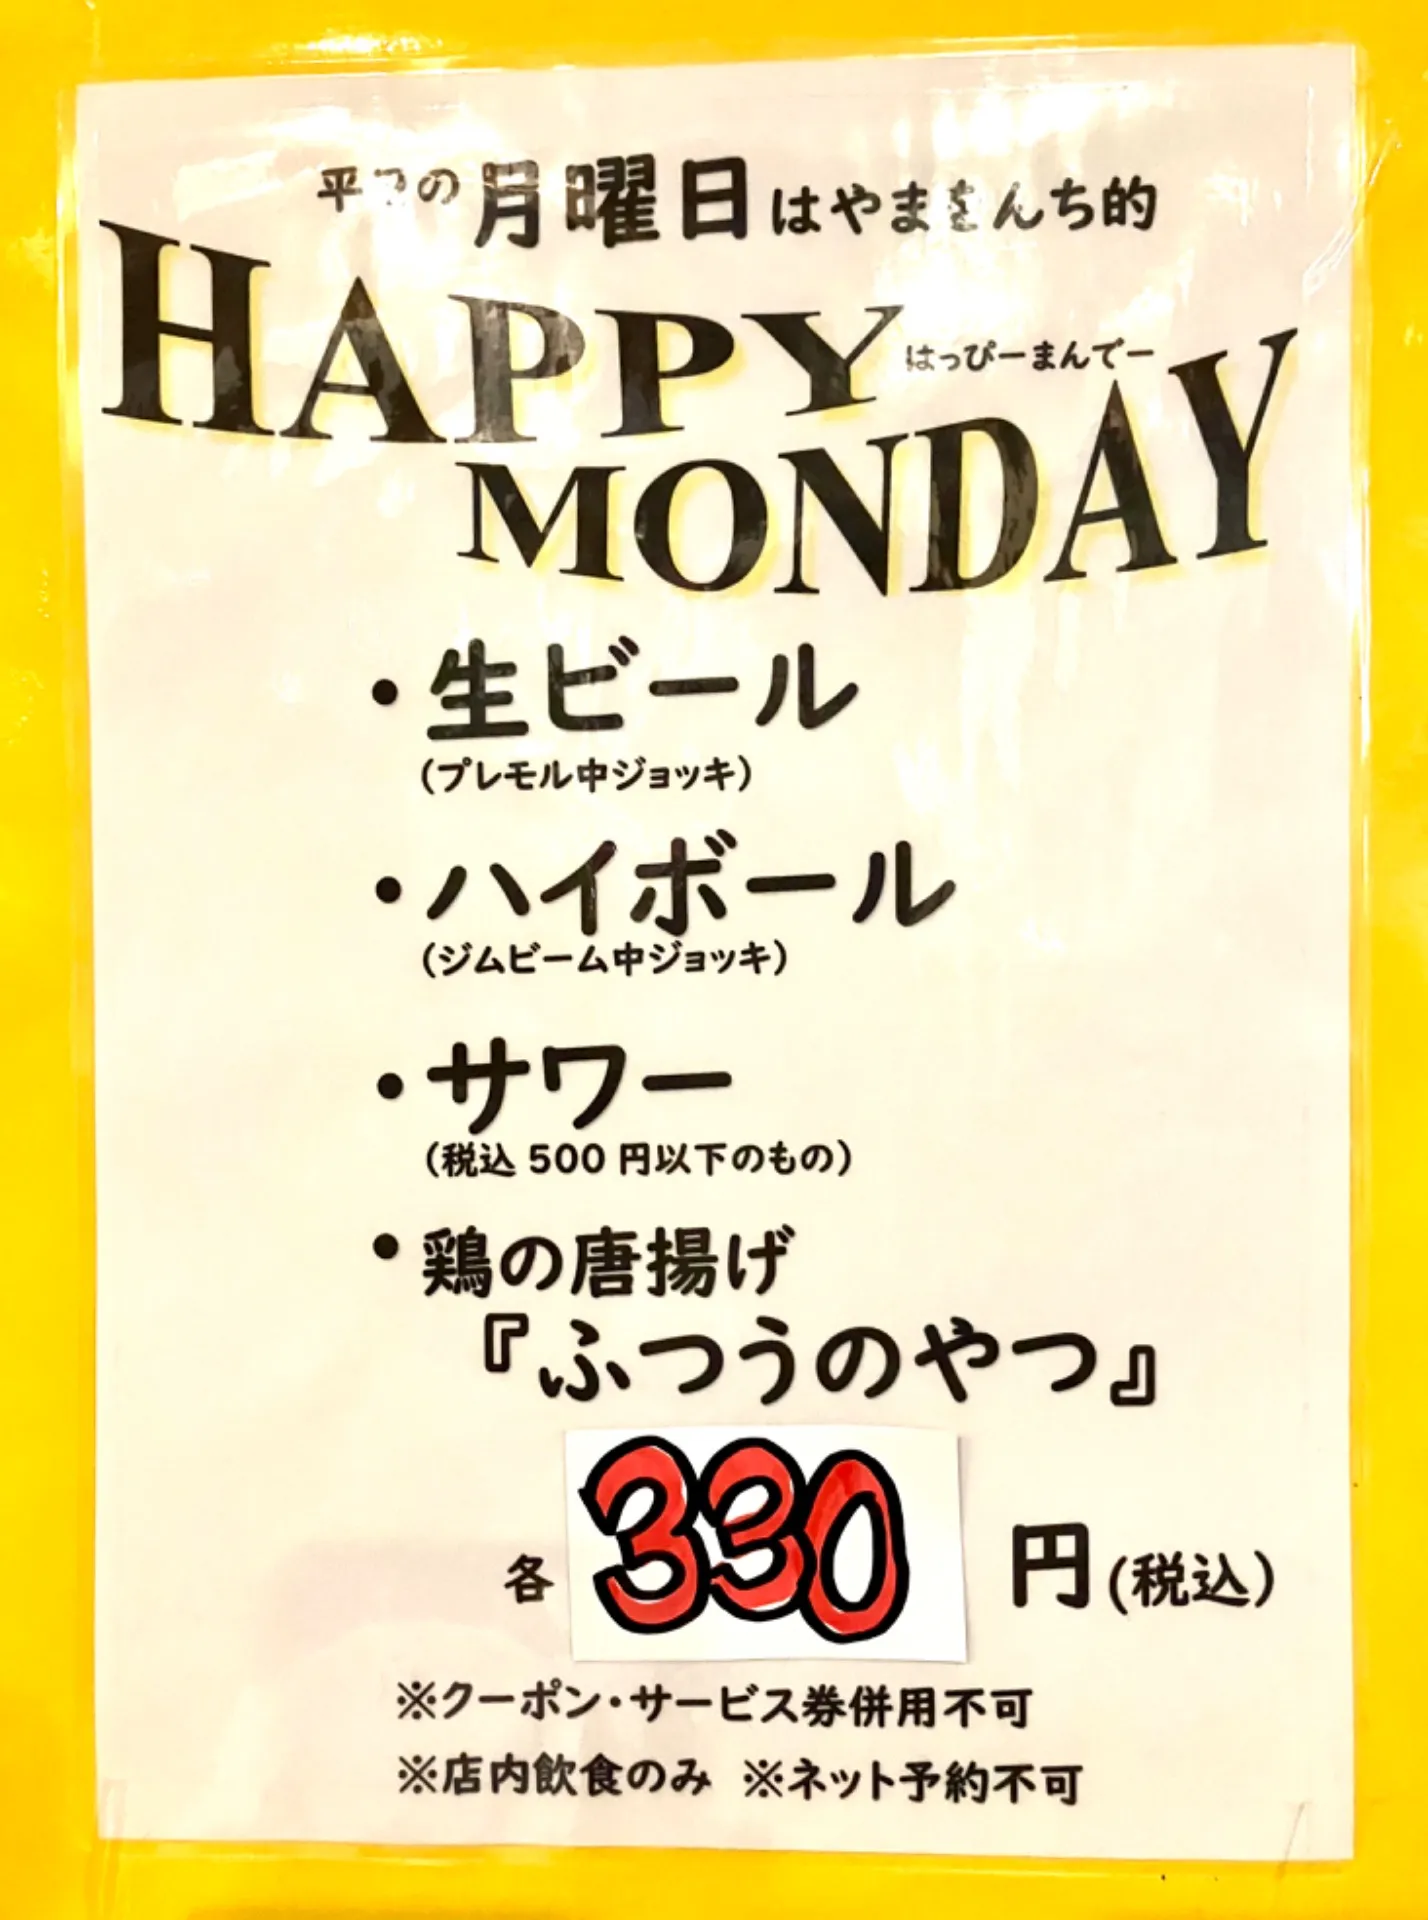 【吉祥寺】平日月曜日は『HAPPY MONDAY』【居酒屋】#9